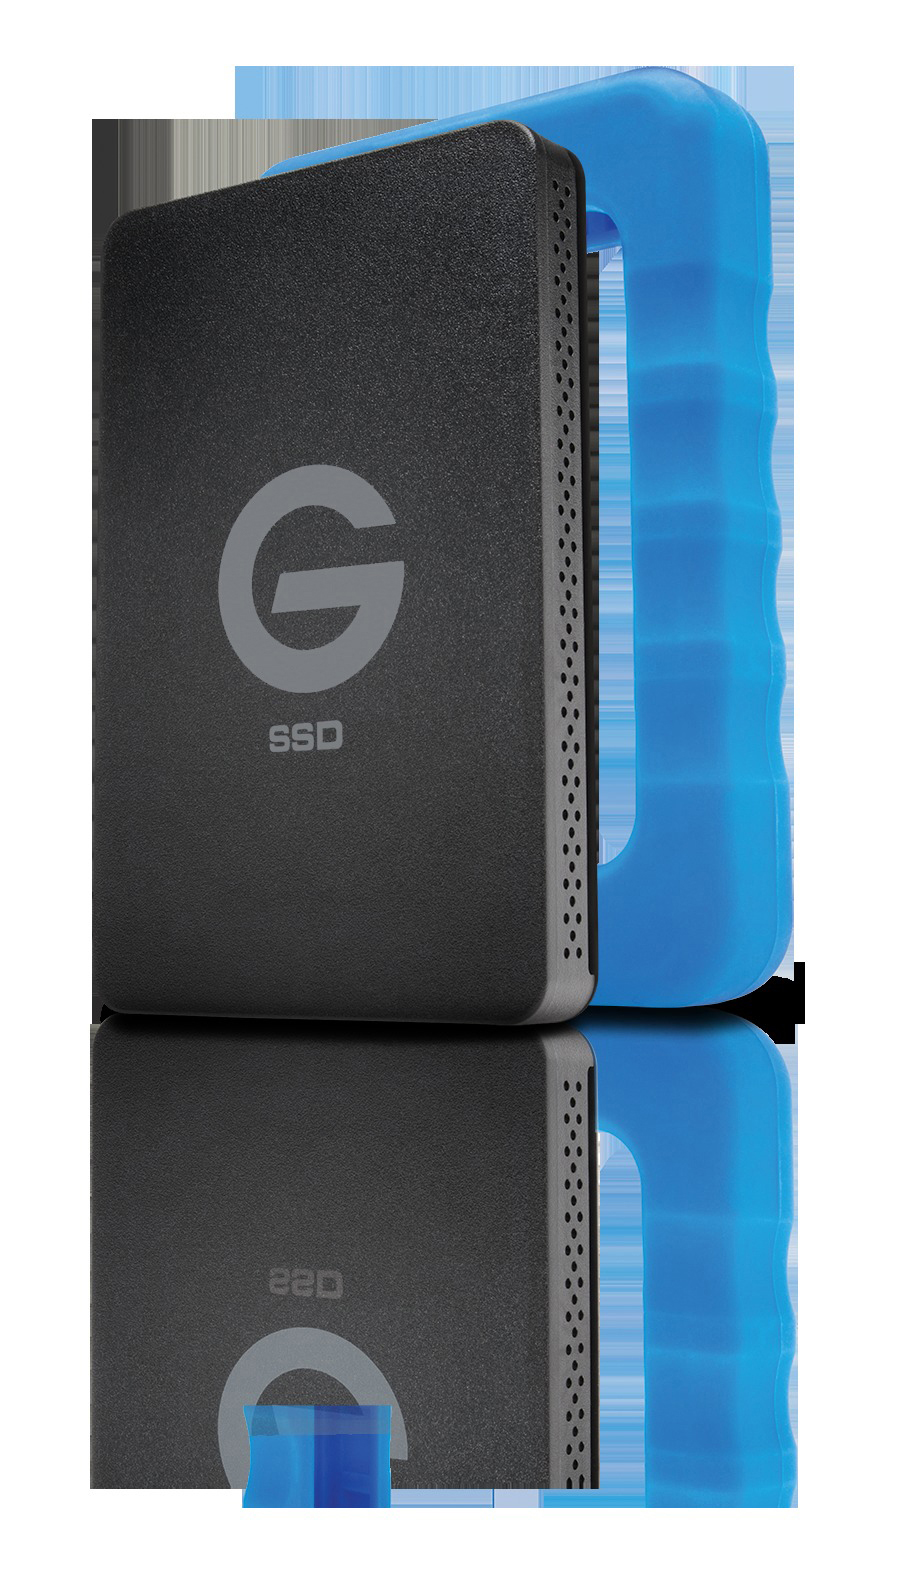 2,5 SSD, ev 1 RaW Schwarz/Blau TB Zoll, extern, G-TECHNOLOGY Festplatte, G-Drive